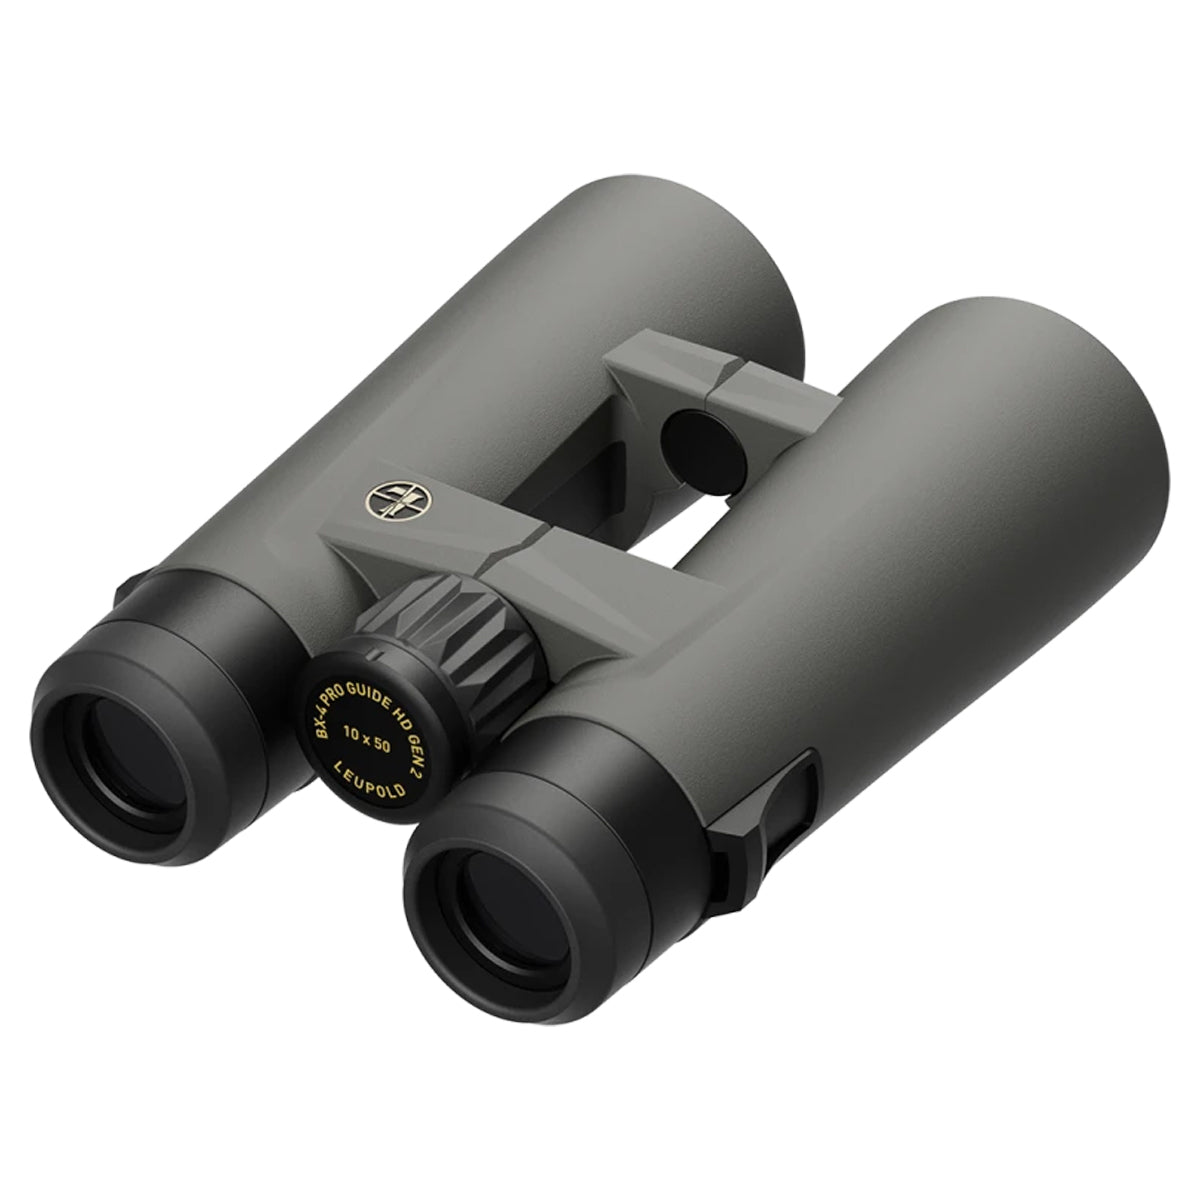 Leupold BX-4 Pro Guide HD 10x50mm Gen 2 Binocular (184762) in  by GOHUNT | Leupold - GOHUNT Shop